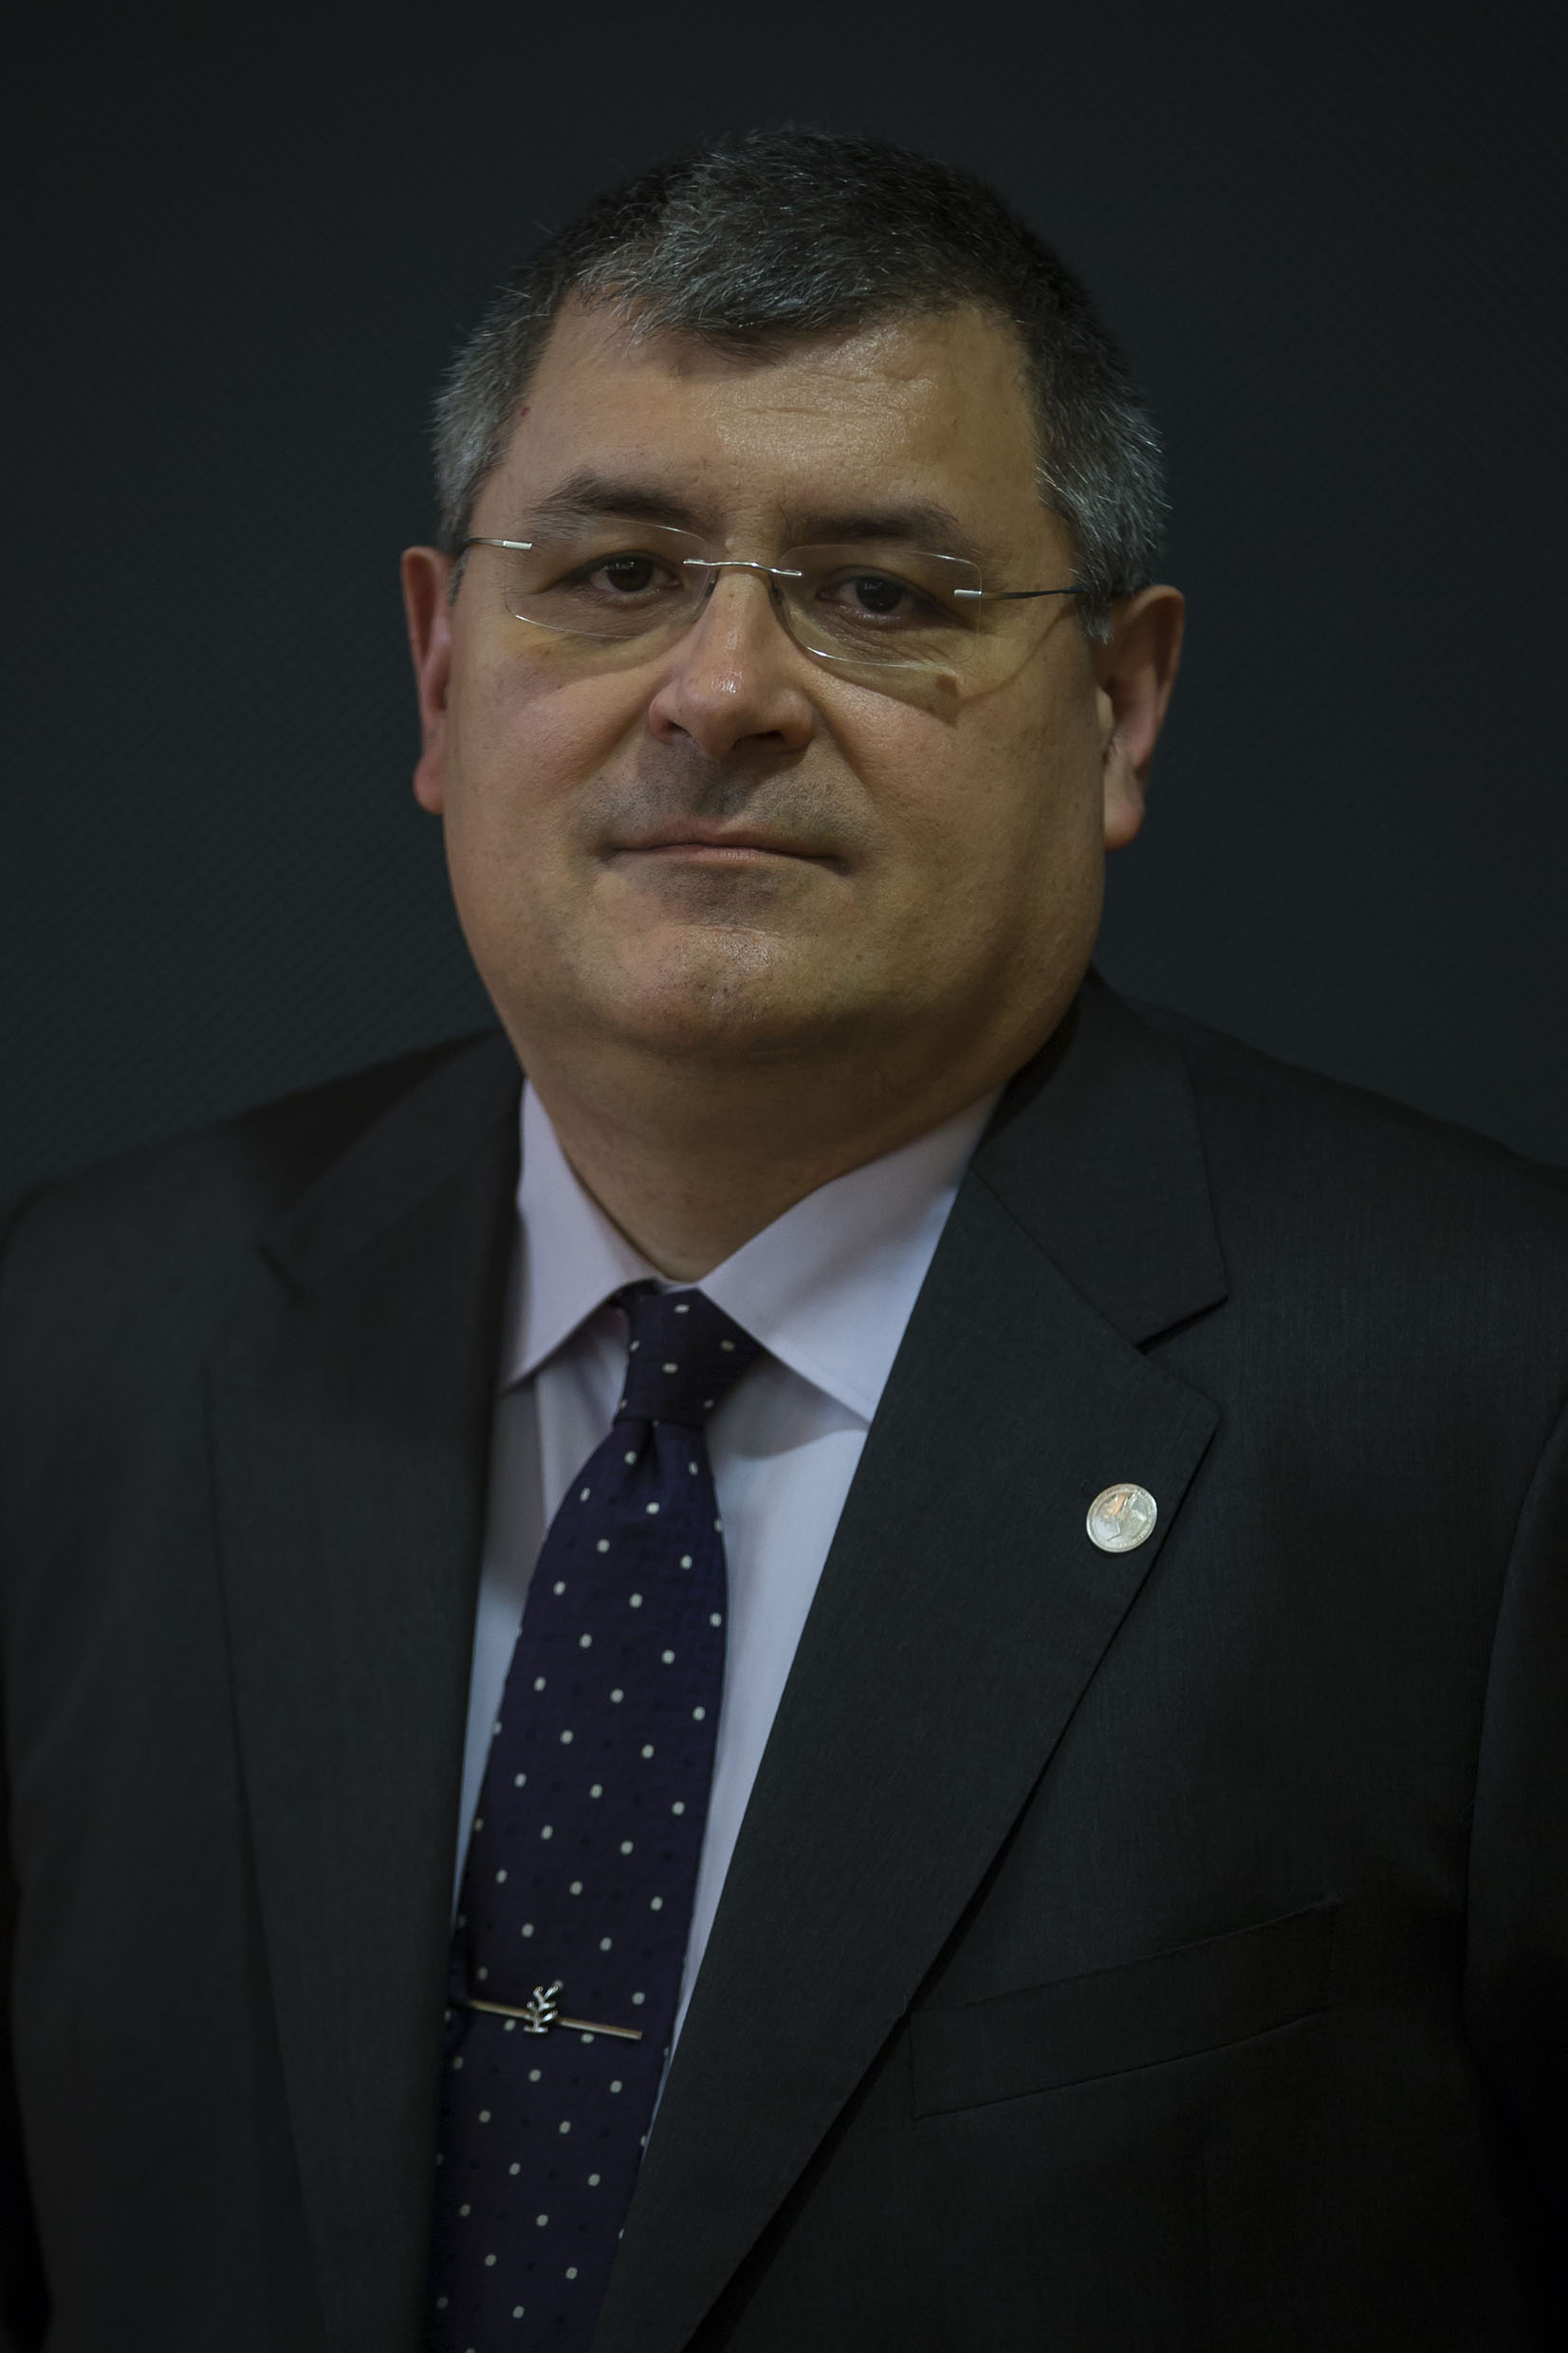 Ricard Martinez